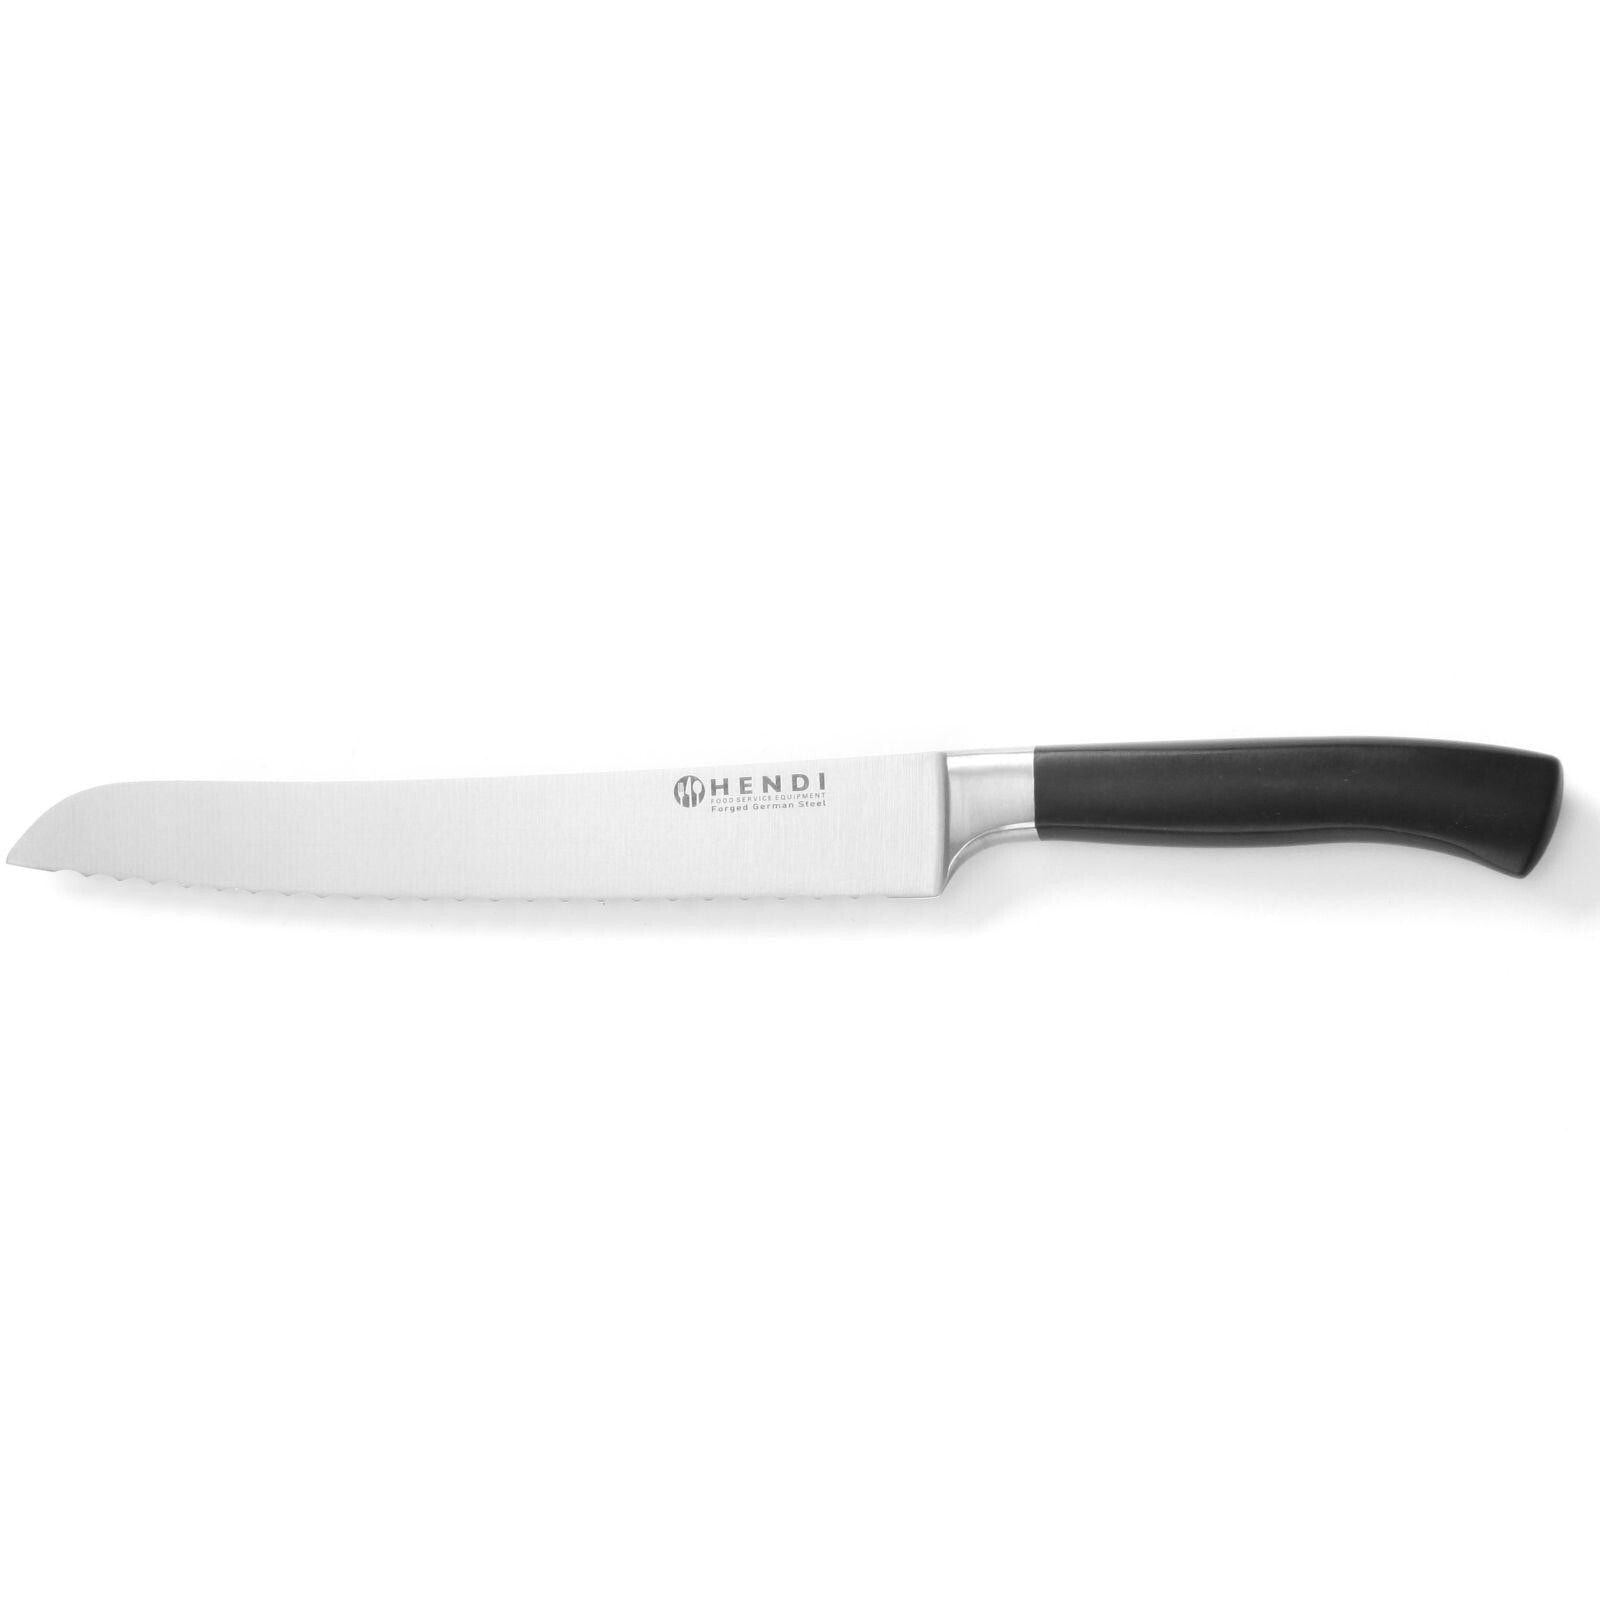 Professional bread knife forged from steel Profi Line 215 mm - Hendi 844298